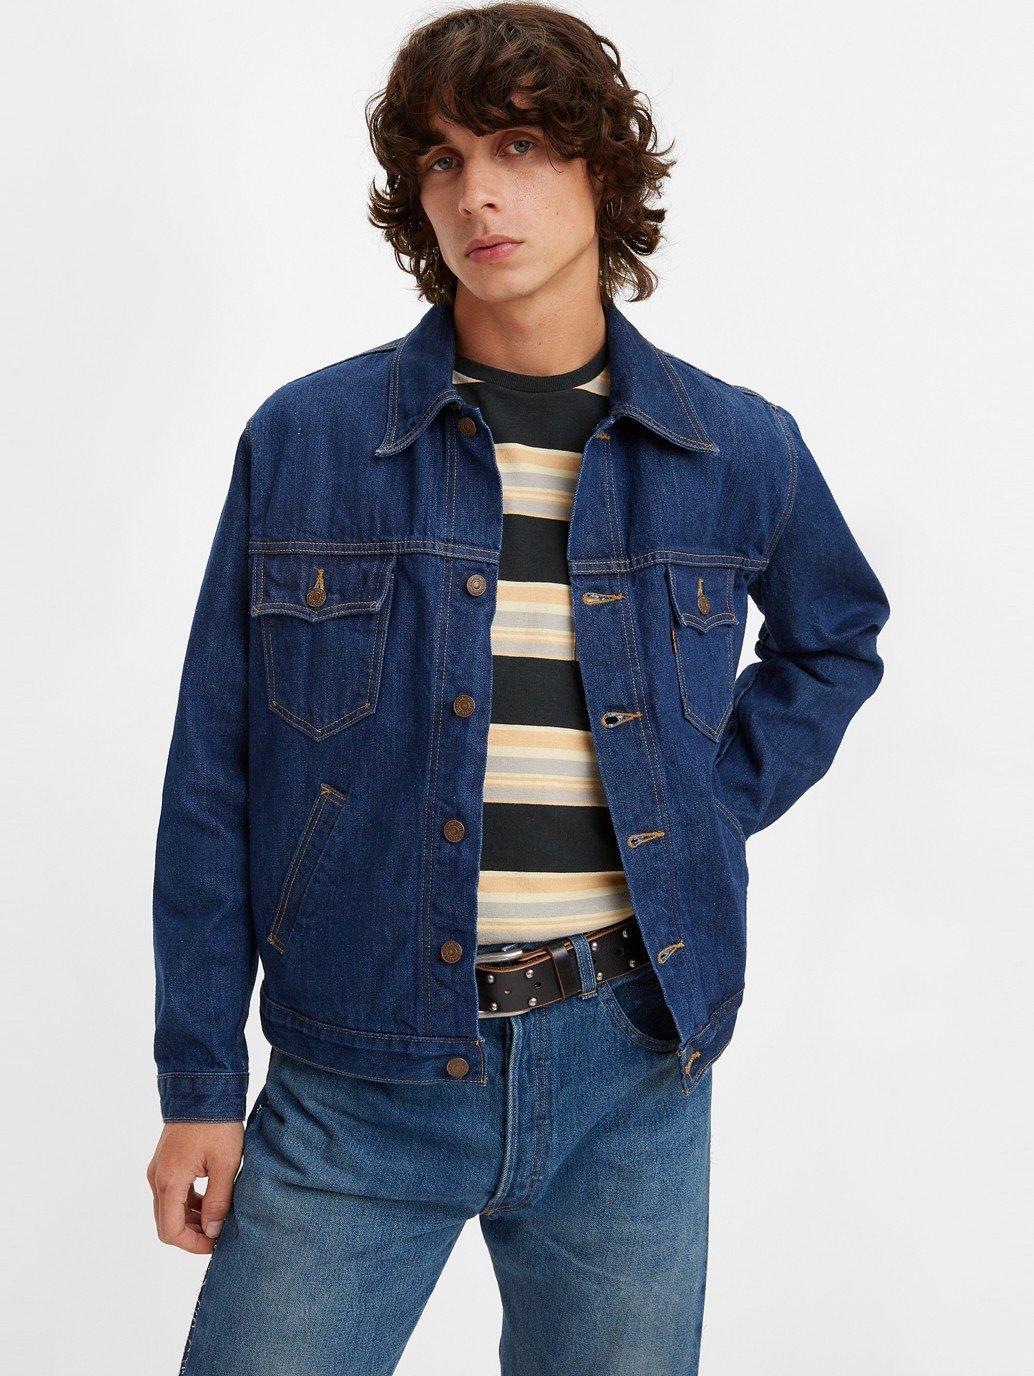 Buy Levi's® Vintage Clothing Men's Orange Tab Men's Trucker Jacket | Levi's®  Official Online Store M